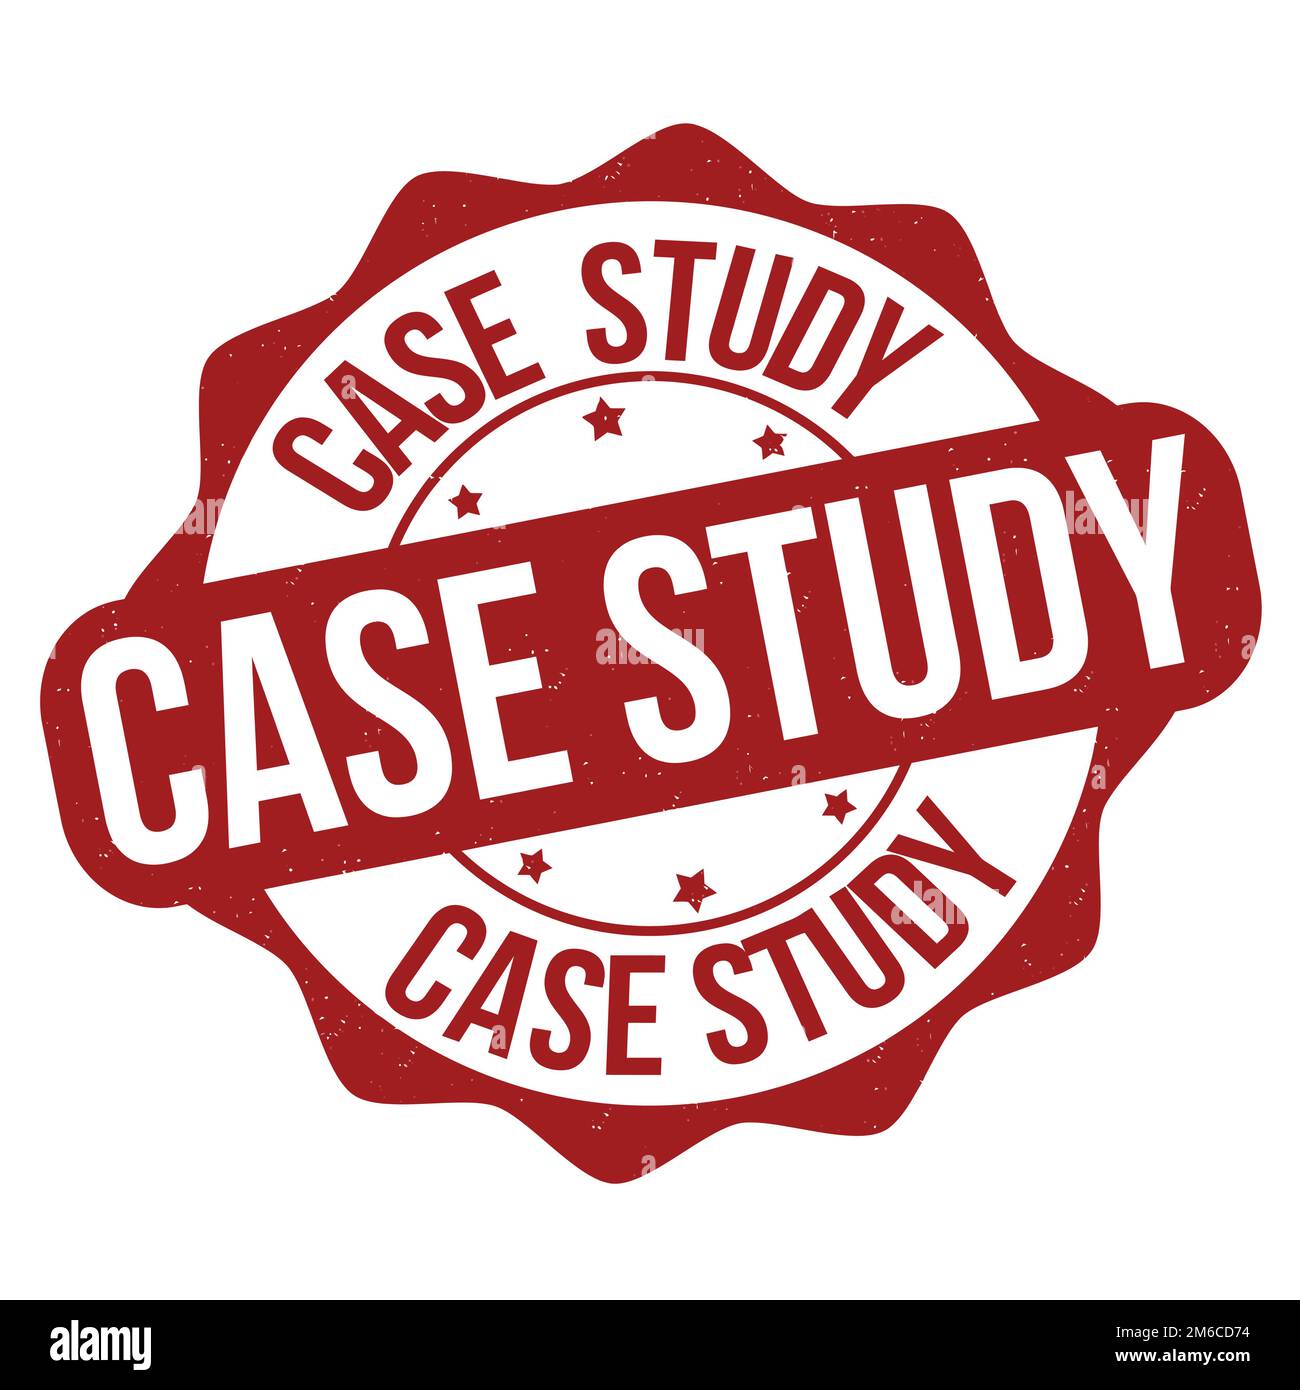 Case study grunge rubber stamp on white background, vector illustration Stock Vector